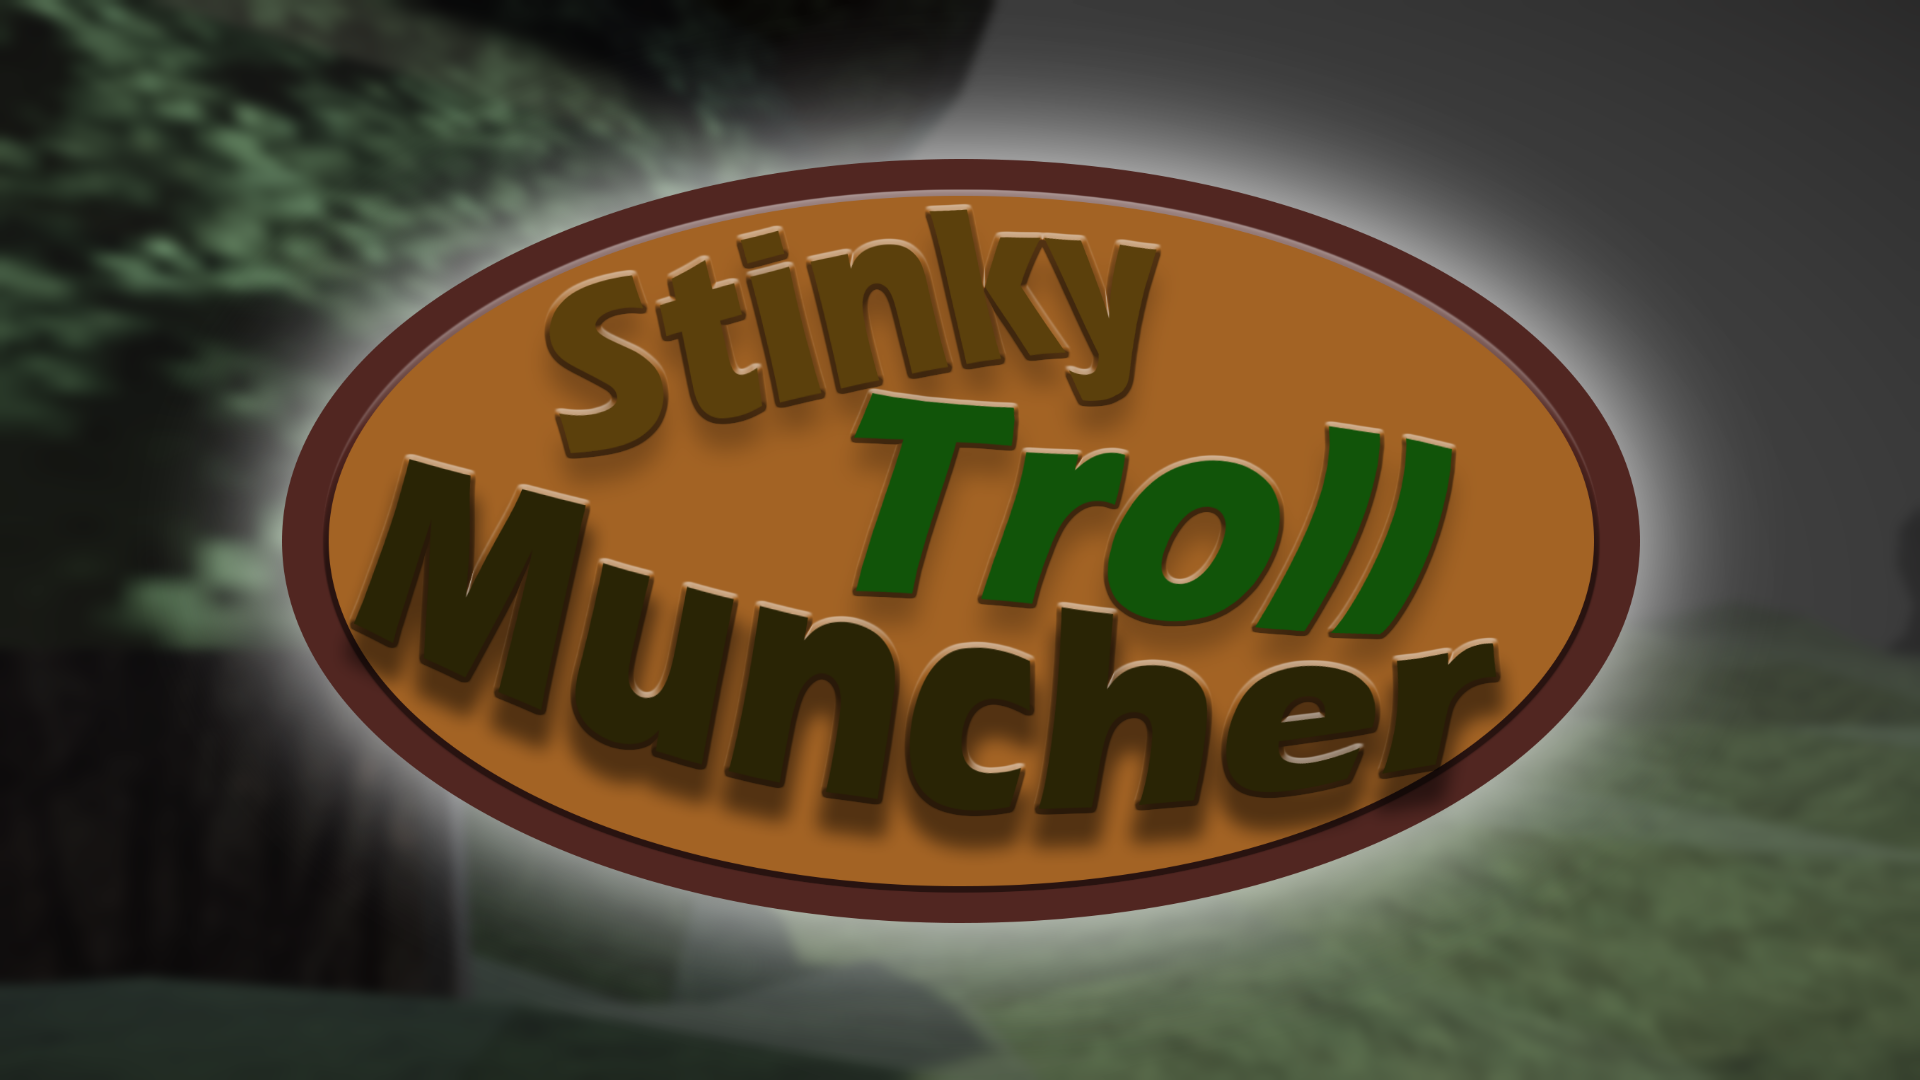 Stinky Troll Muncher